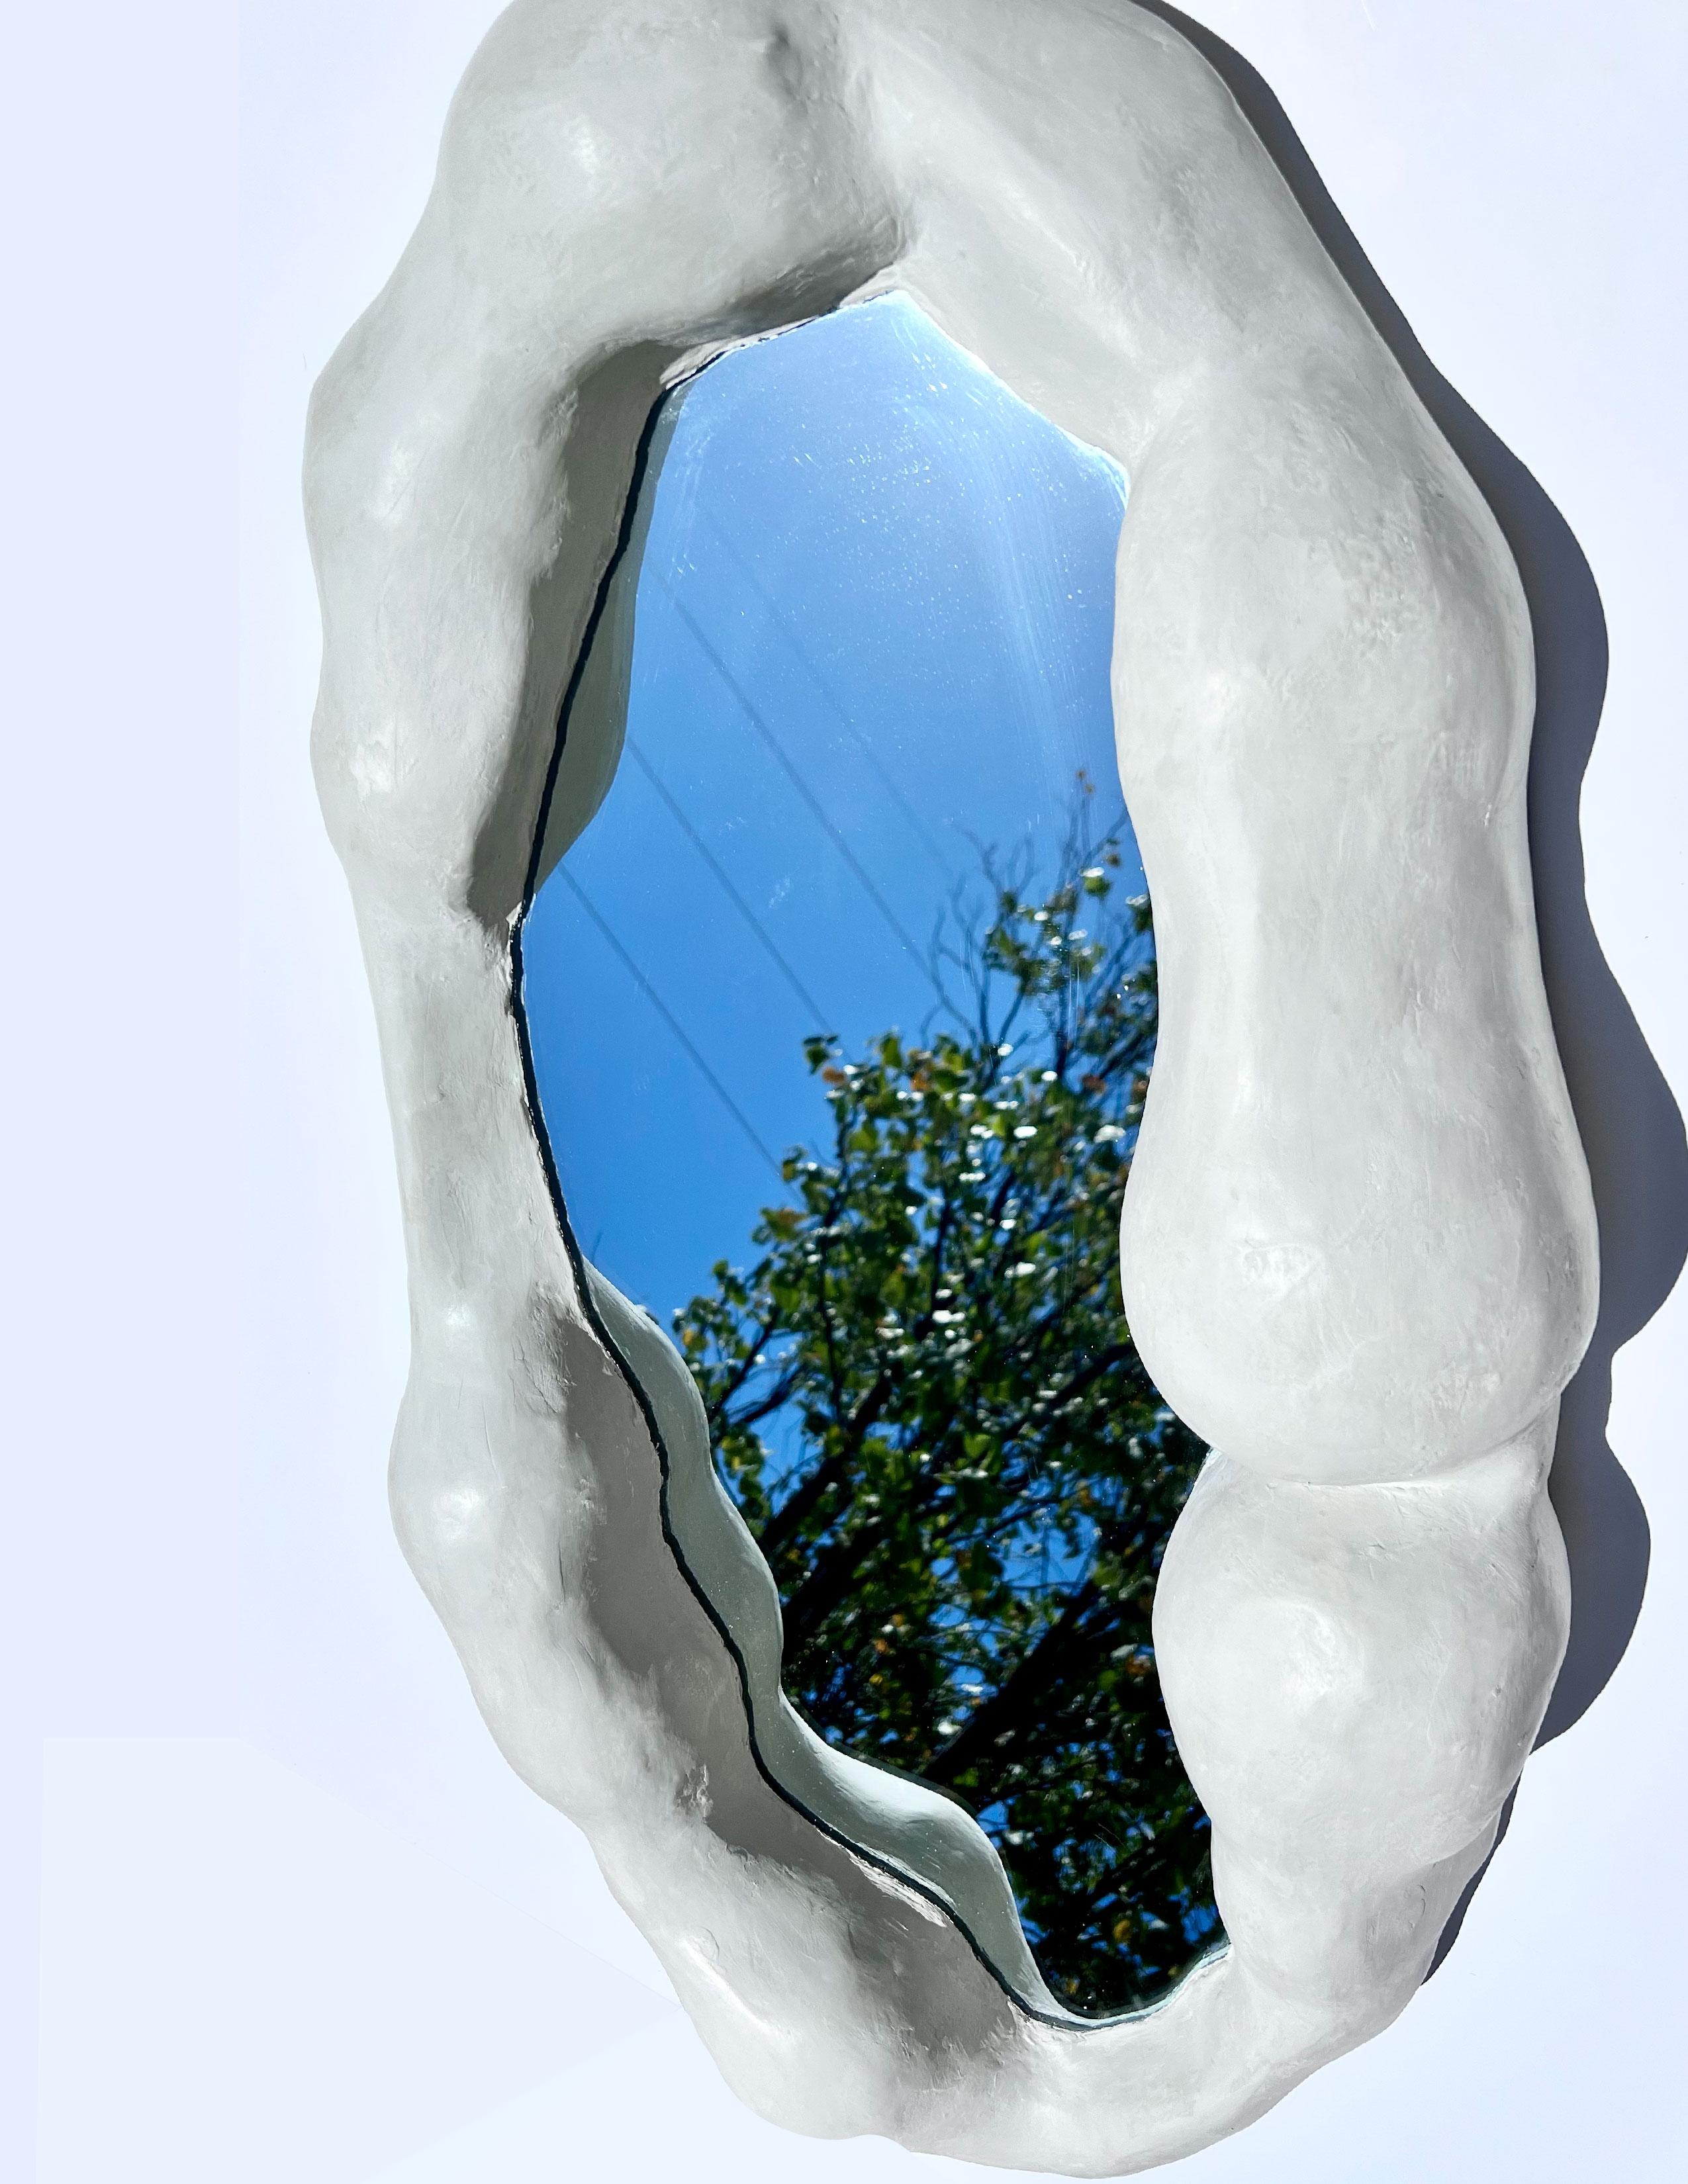 Organic Modern Biomorphic Mirror N.1 by Studio Chora, Large Wall Mirror, Off-White, In Stock